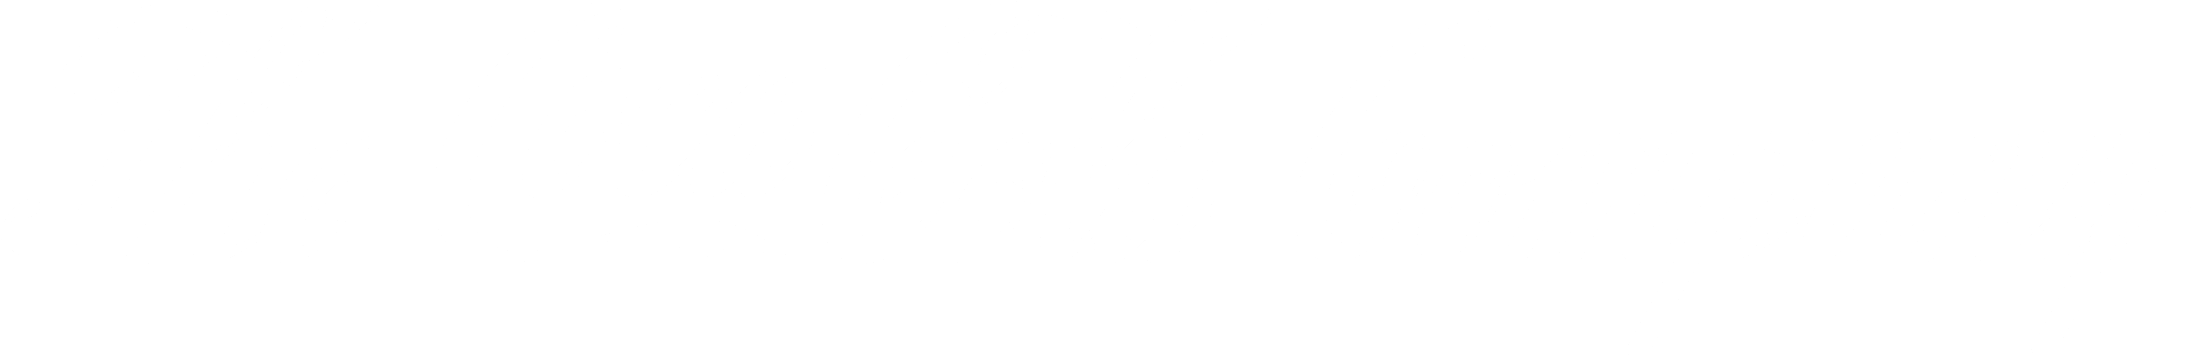 The Coca Cola Company Logo Black And White - Tiff Logo White (2400x2400), Png Download